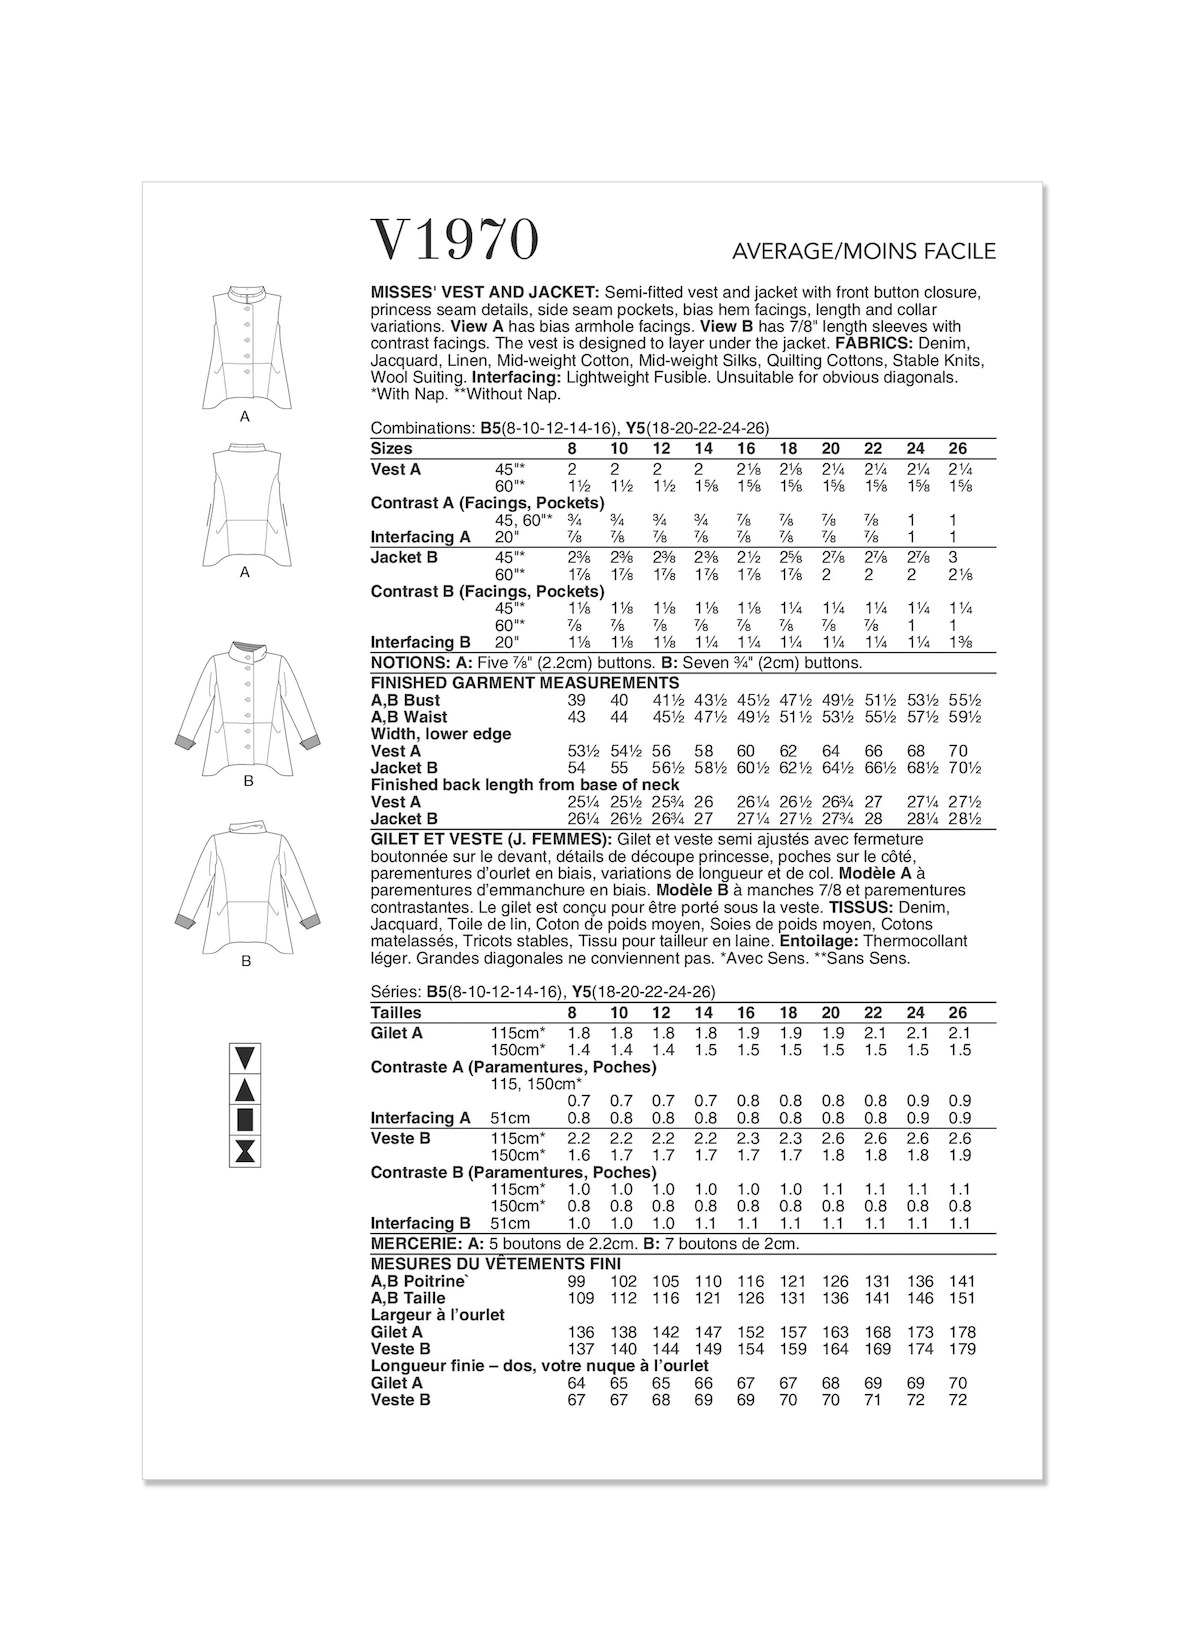 Vogue® Patterns Papierschnittmuster Blusen Damen Marcy Tilton  V1970